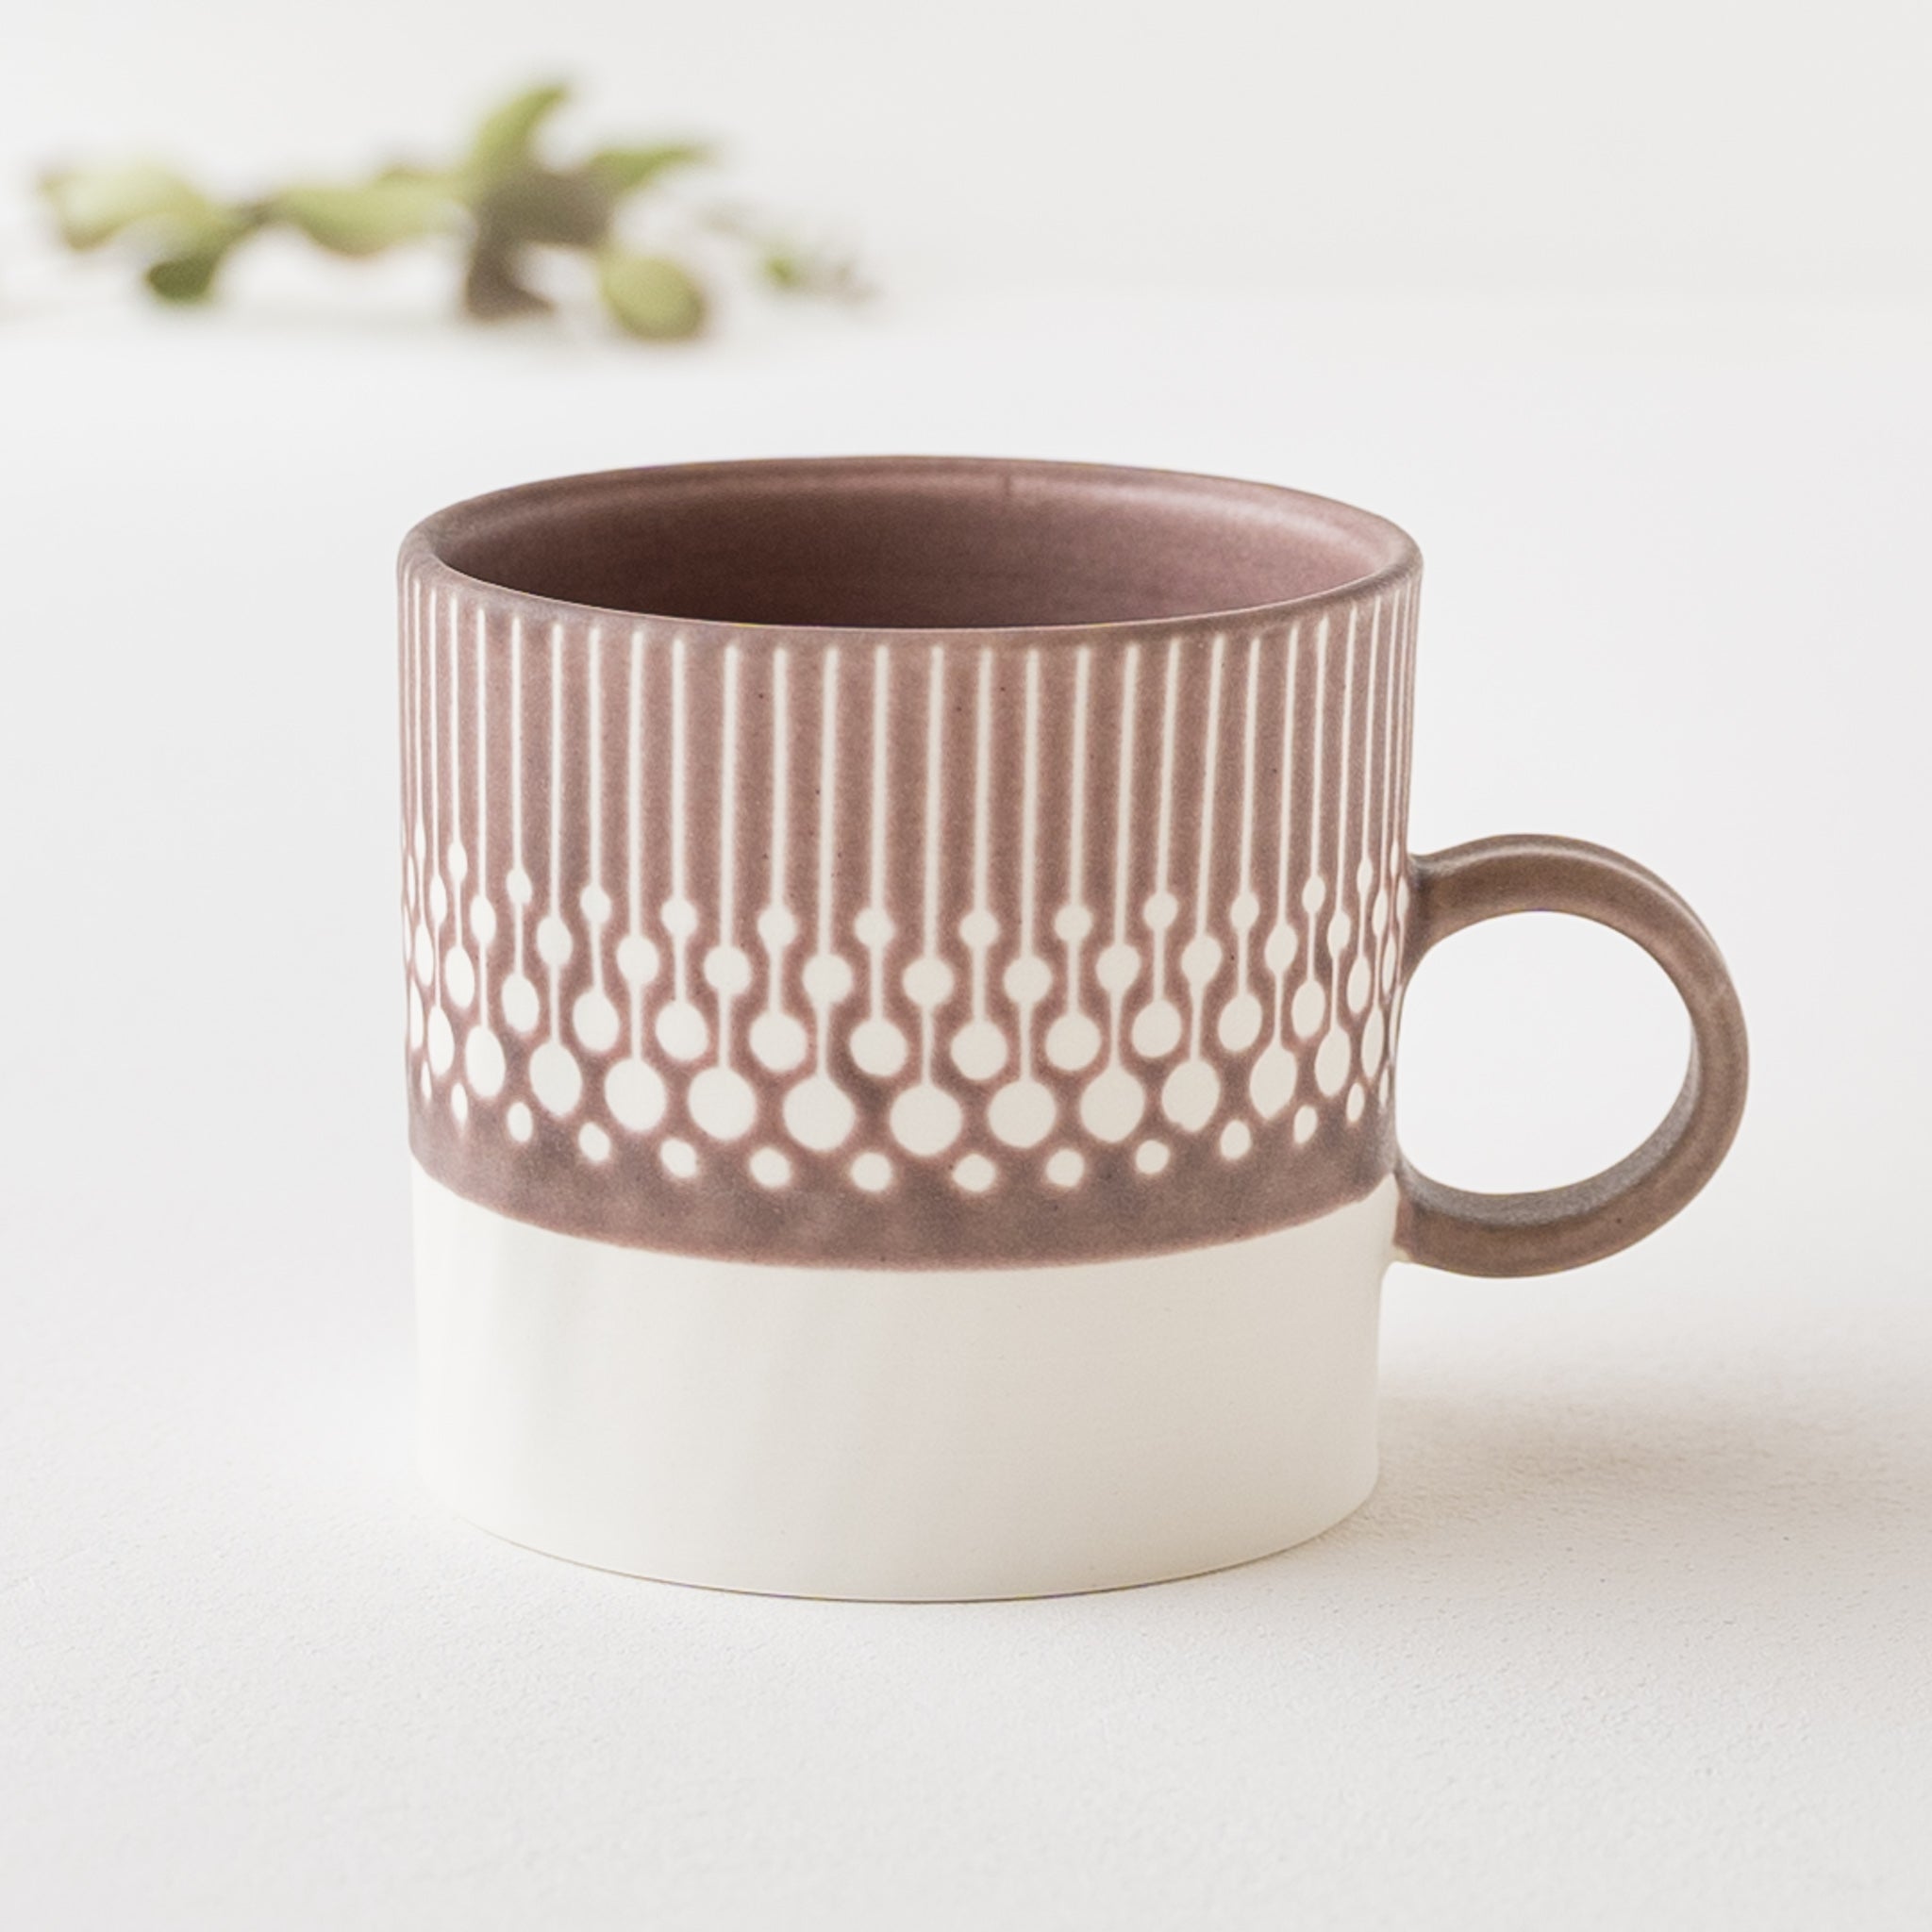 Yukari Nakagawa's Mug with Stylish Dots